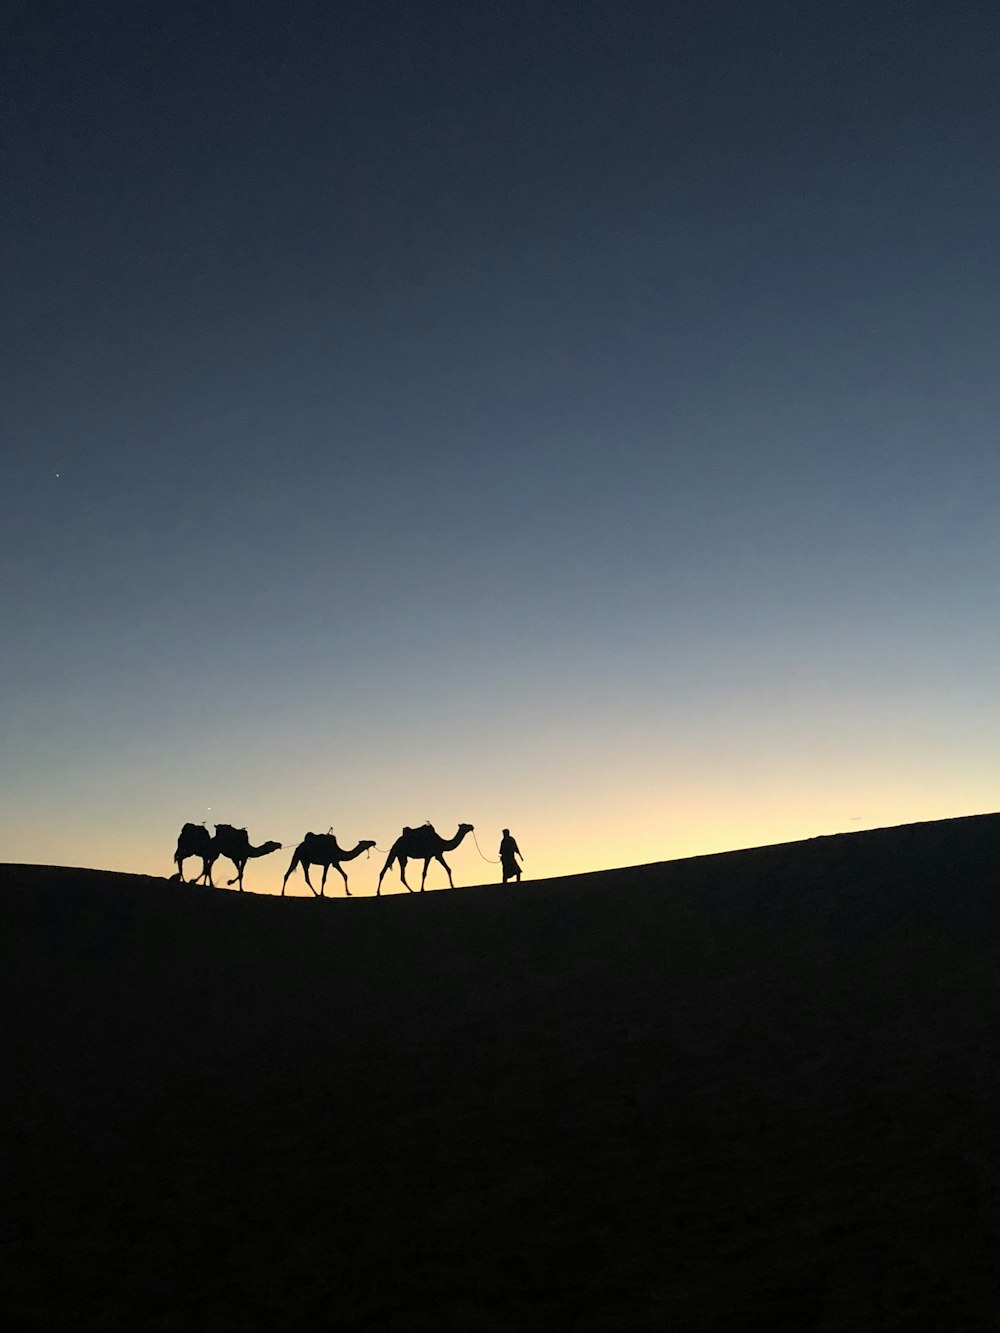 Foto de la silueta del hombre sosteniendo la correa del camello